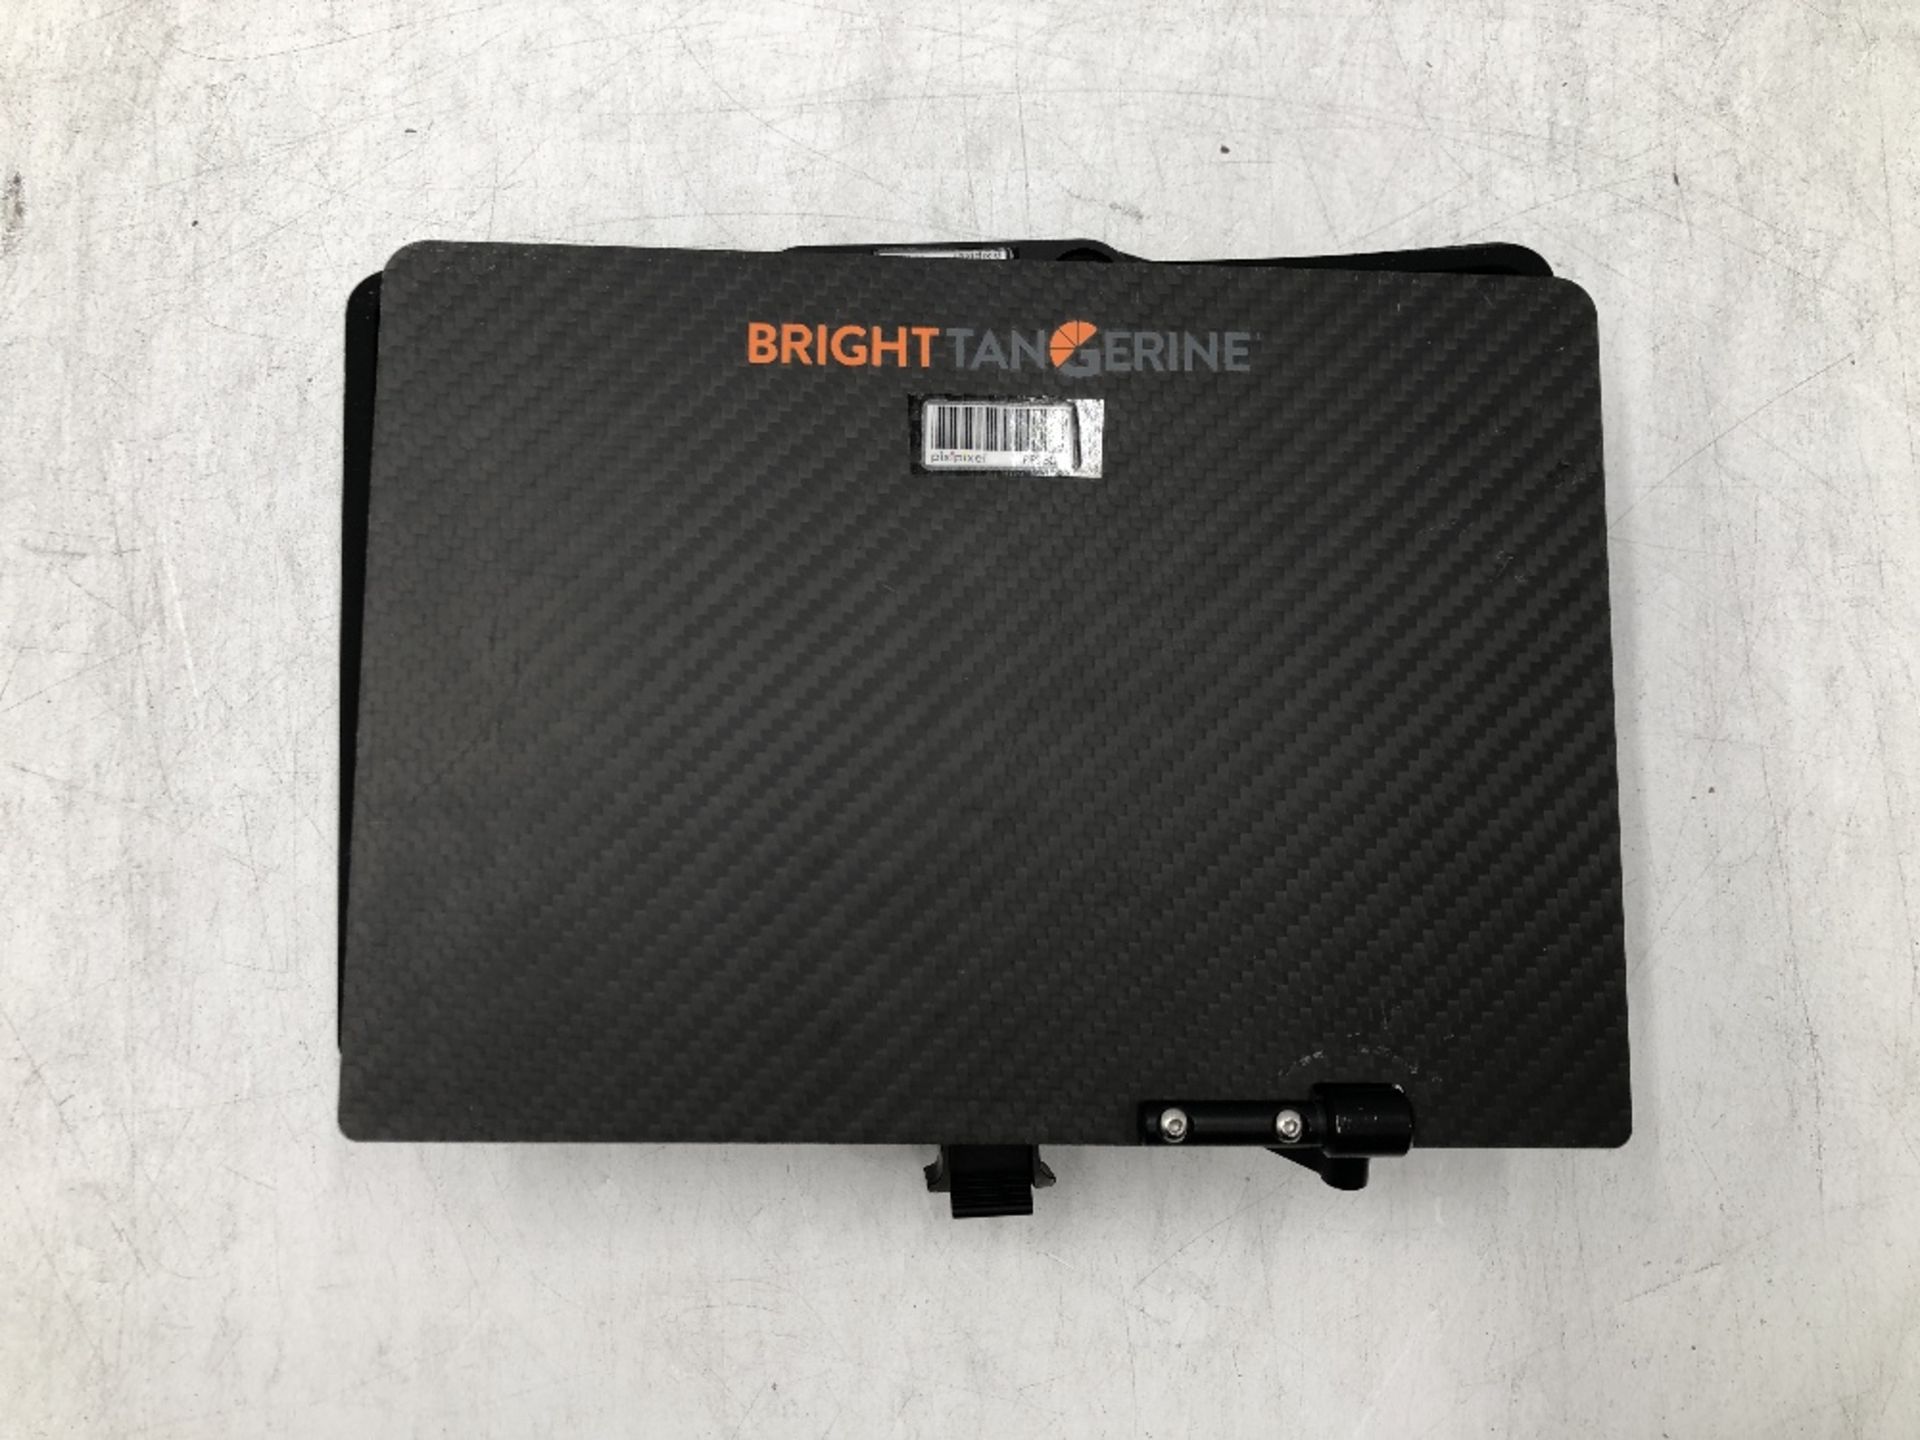 Bright Tangerine Clash 138 Matte Box Kit With Peli Case - Image 3 of 6